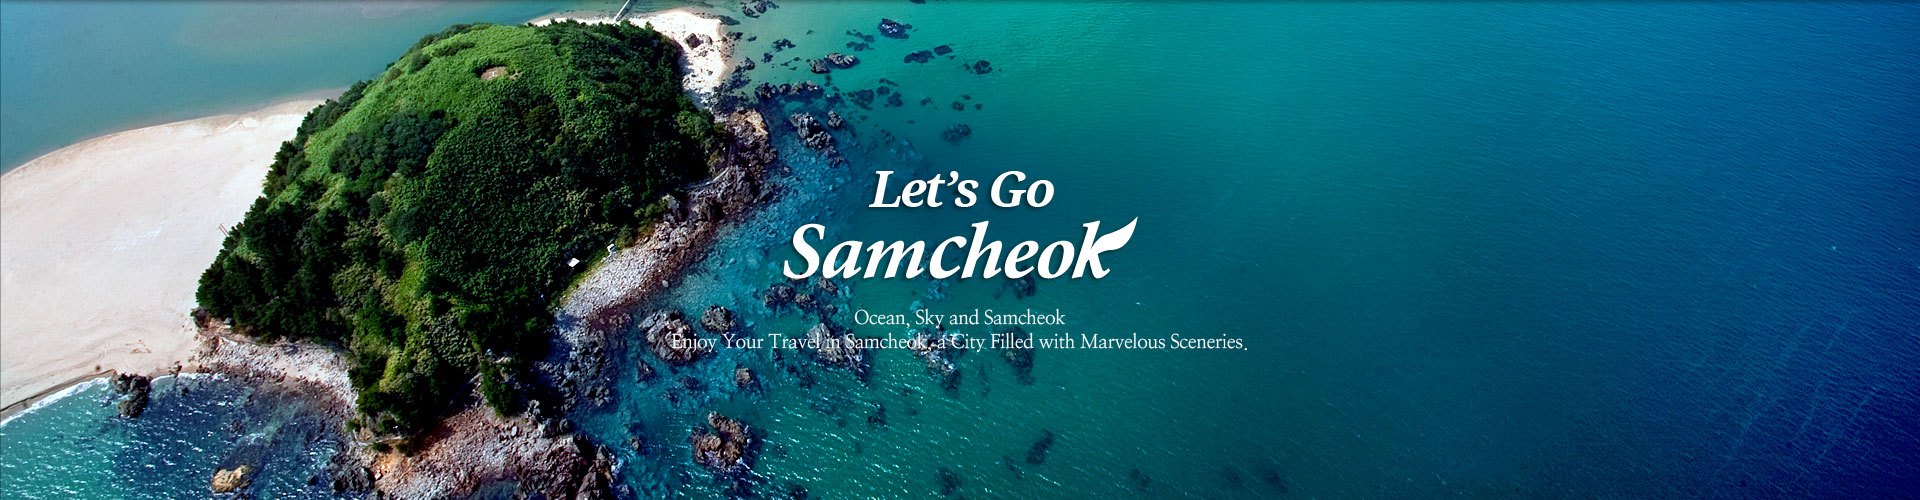 Let's go Samcheok